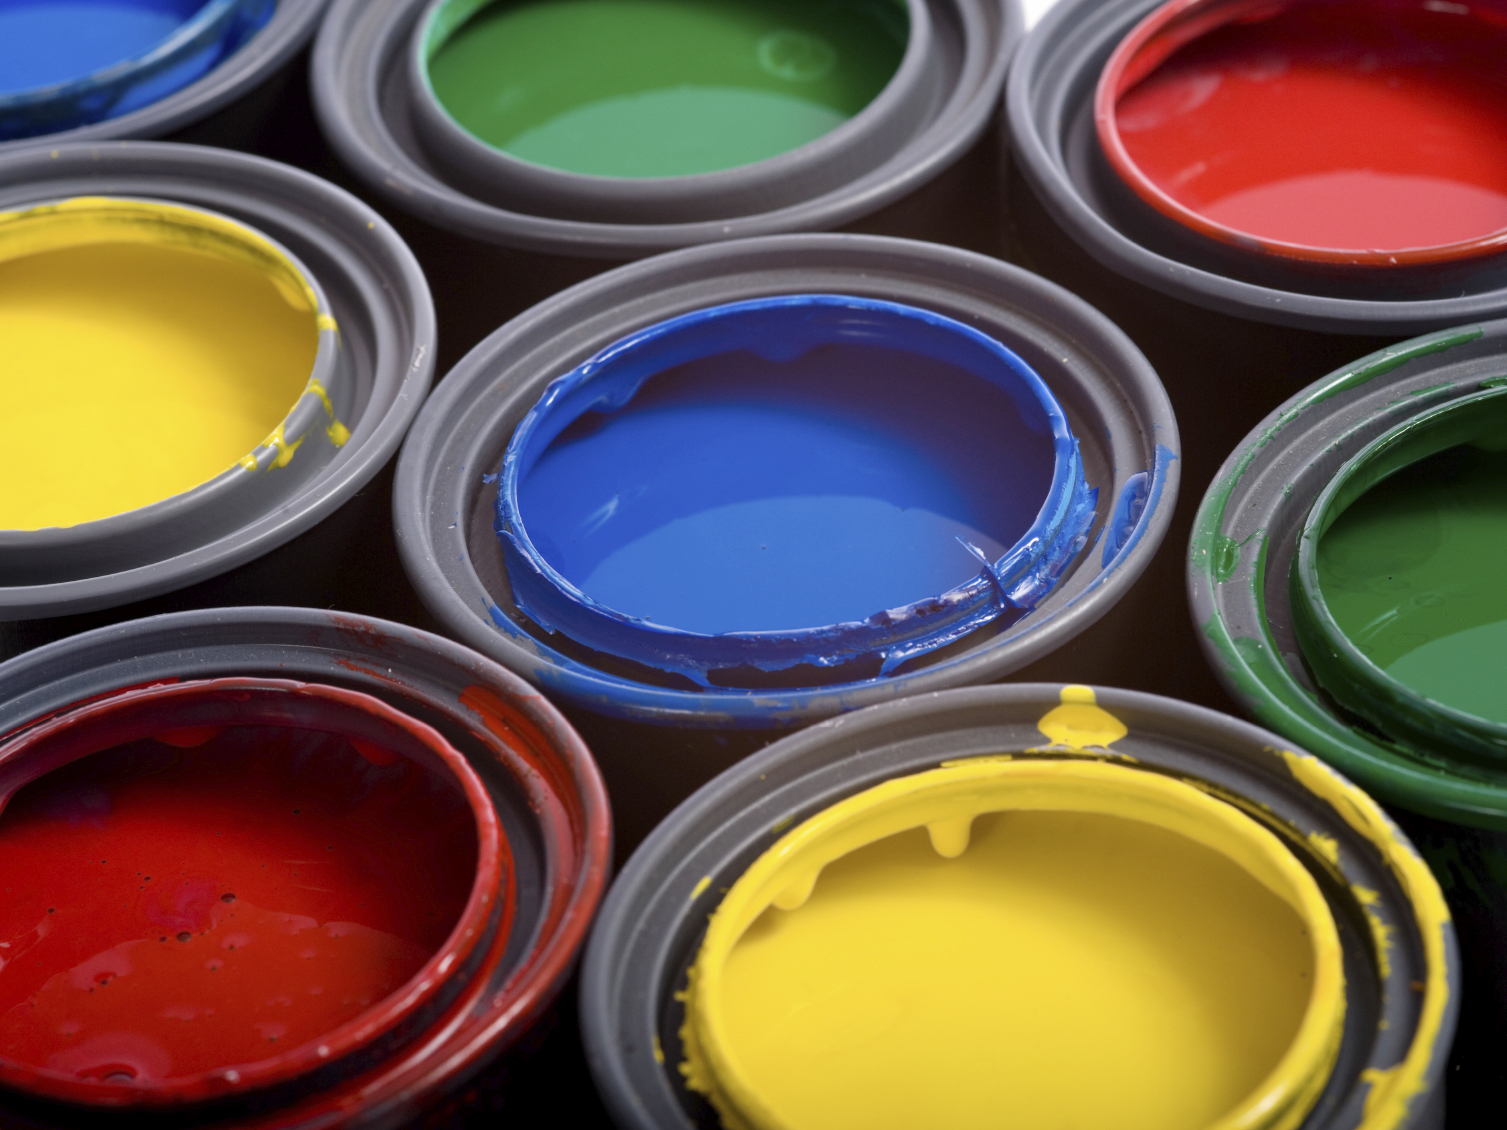 iStock 6532556 paint cans primary colors s4x3 - A ciência e importância da Colorimetria